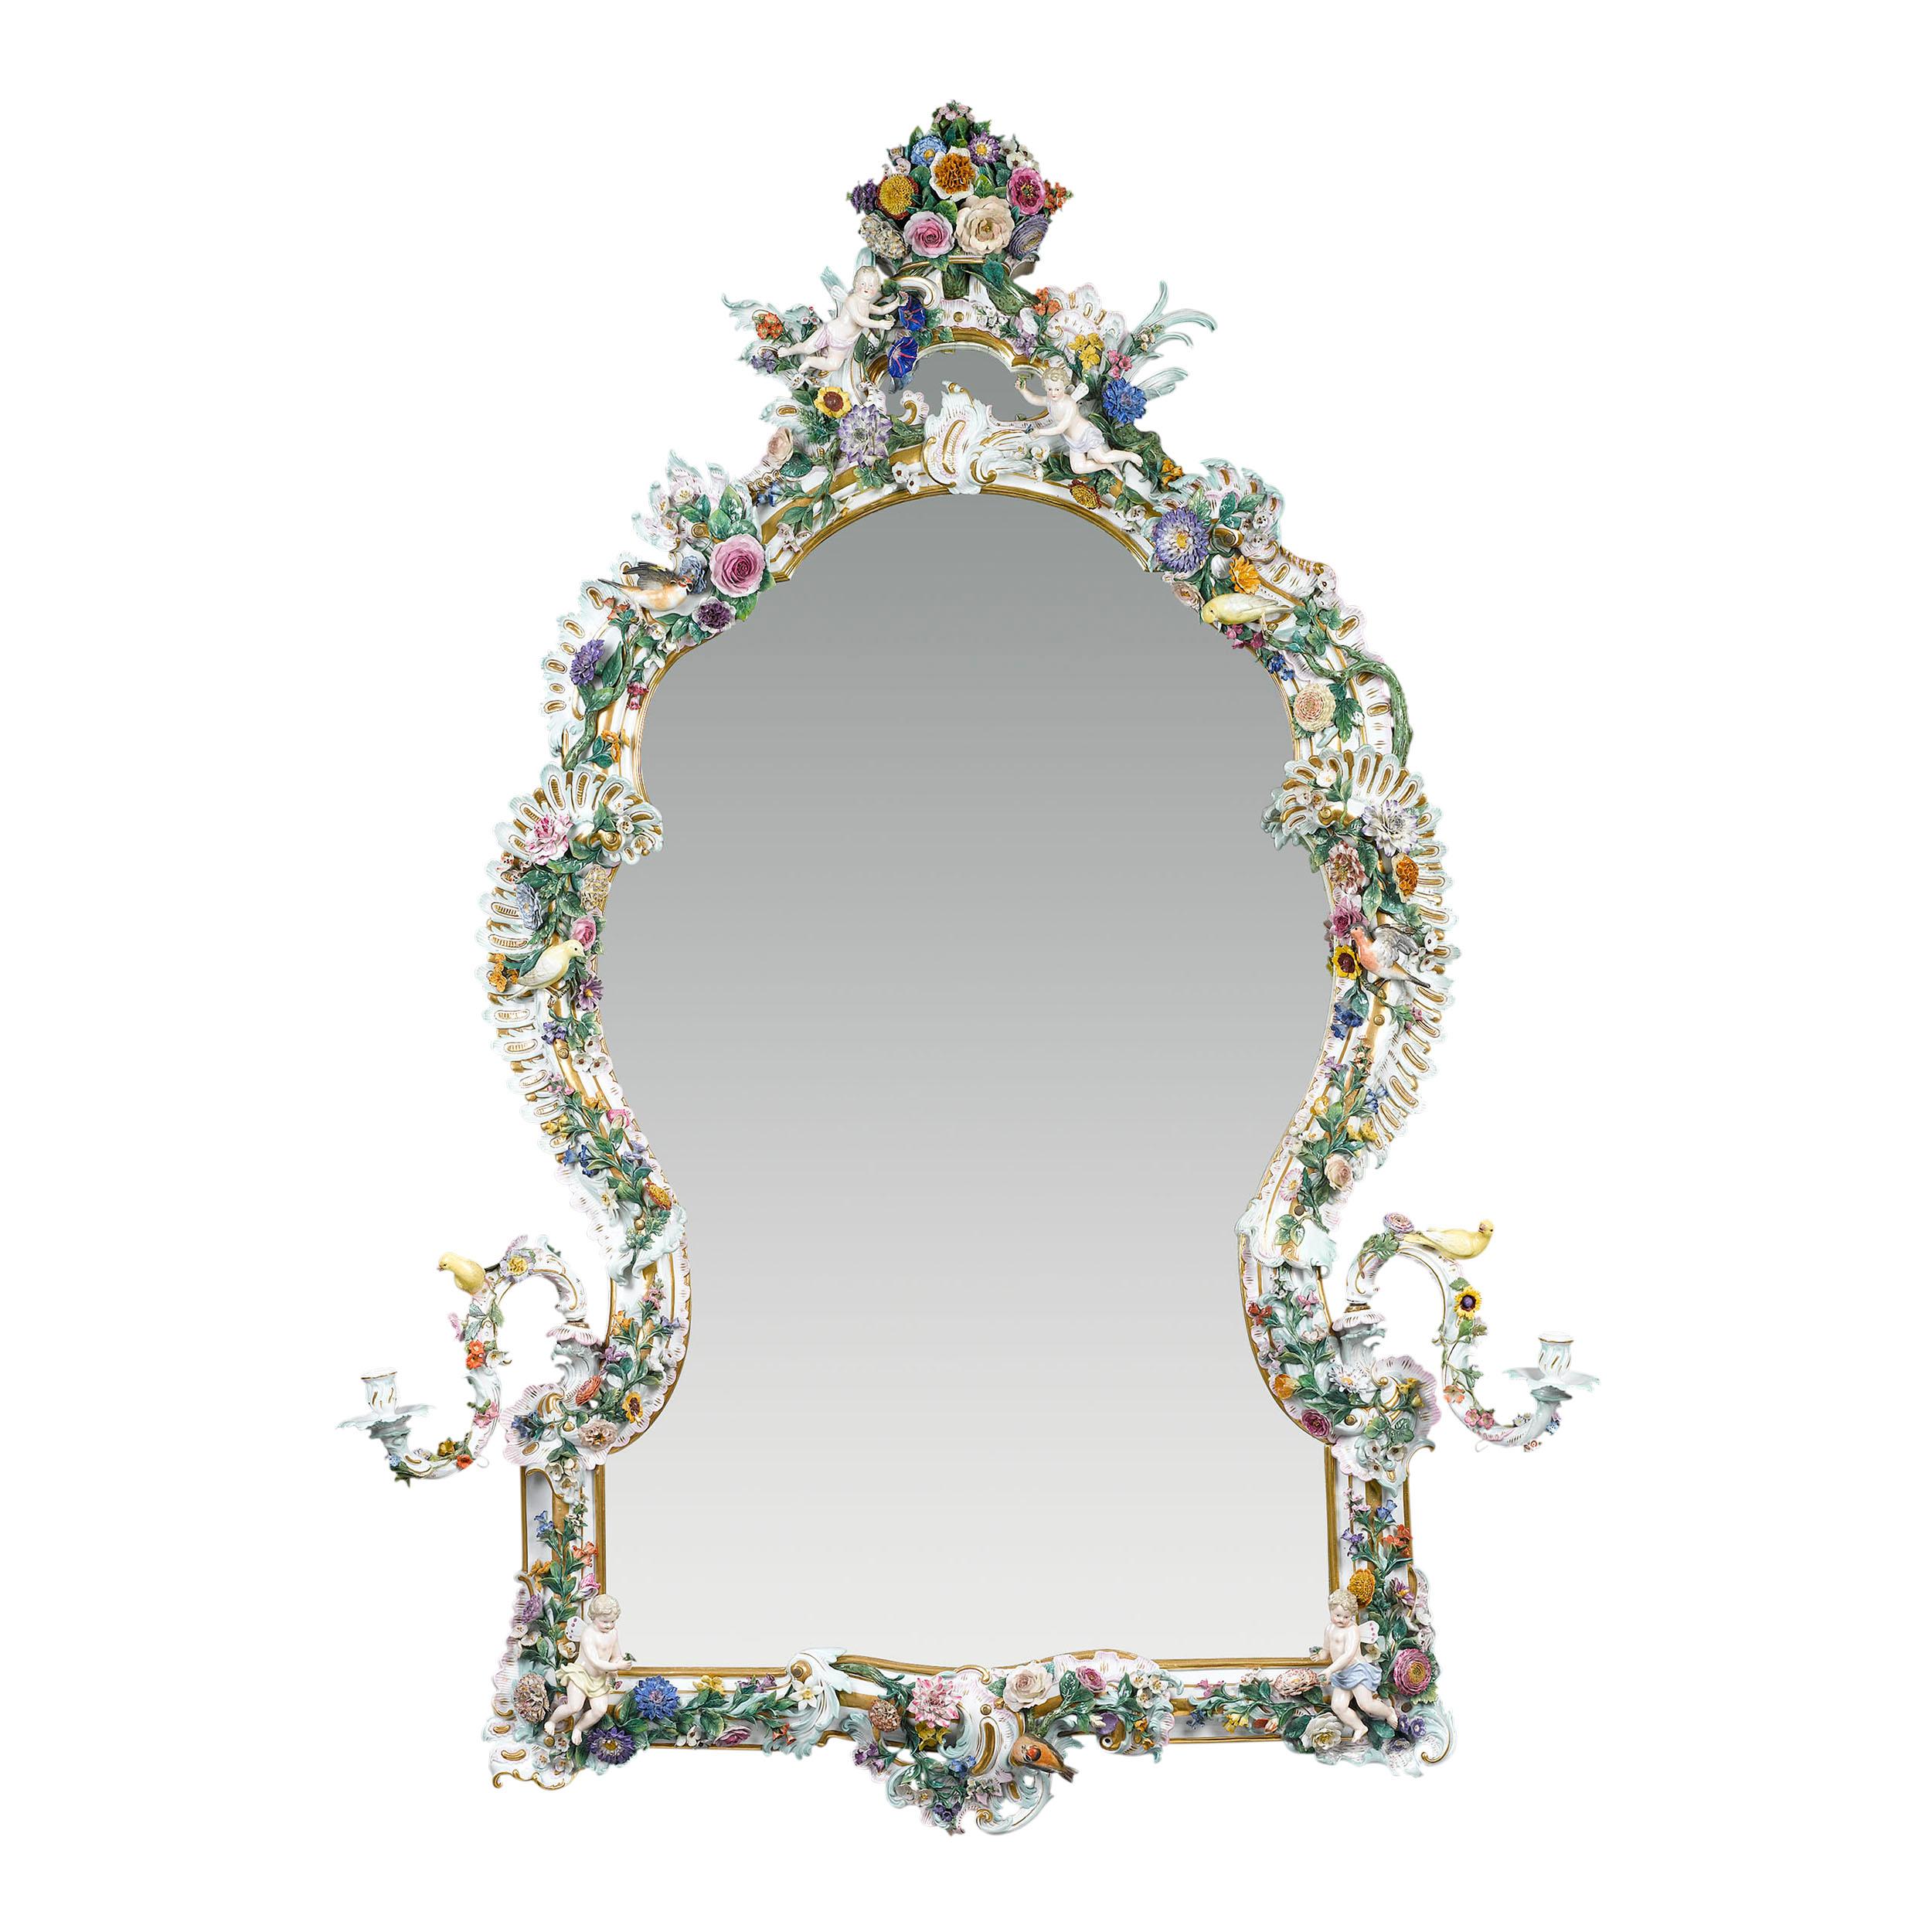 Meissen Porcelain Rococo Mirror